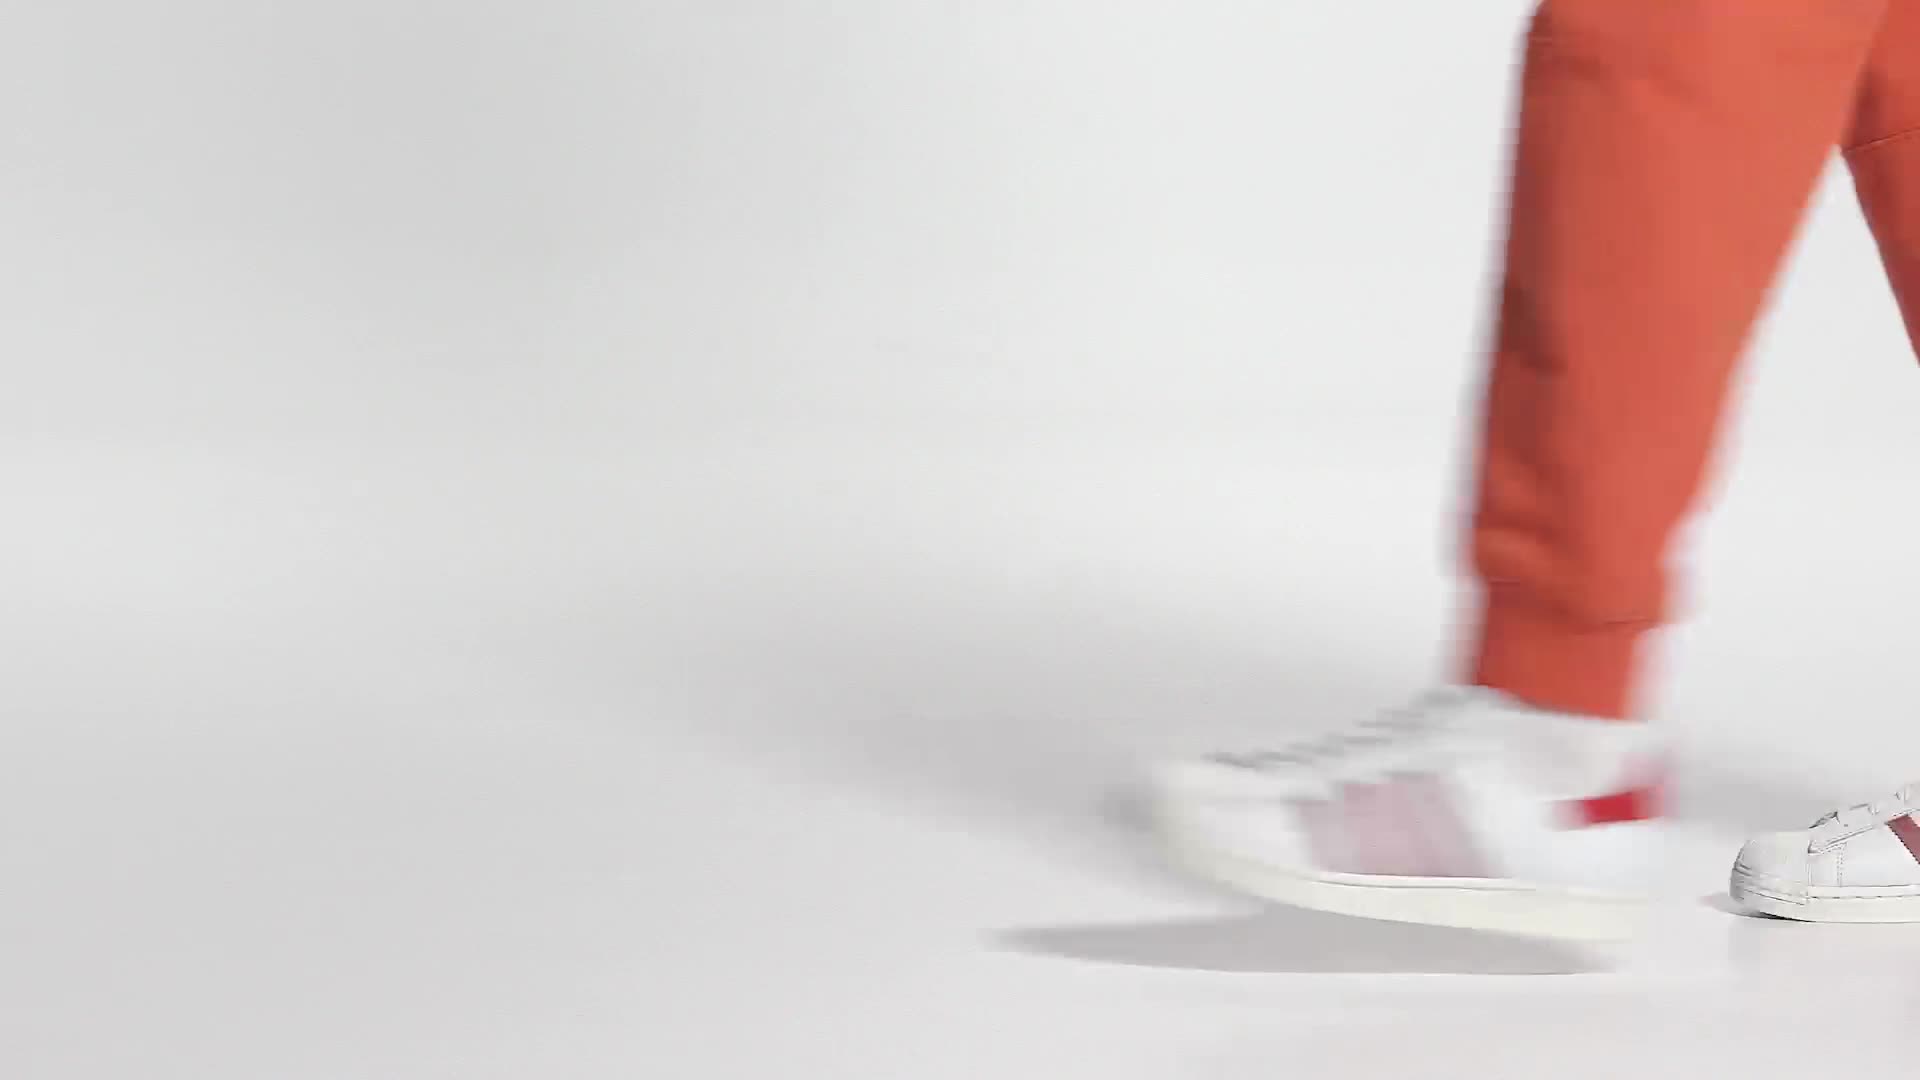 adidas Superstar Shoes - White | Men's Lifestyle | adidas US